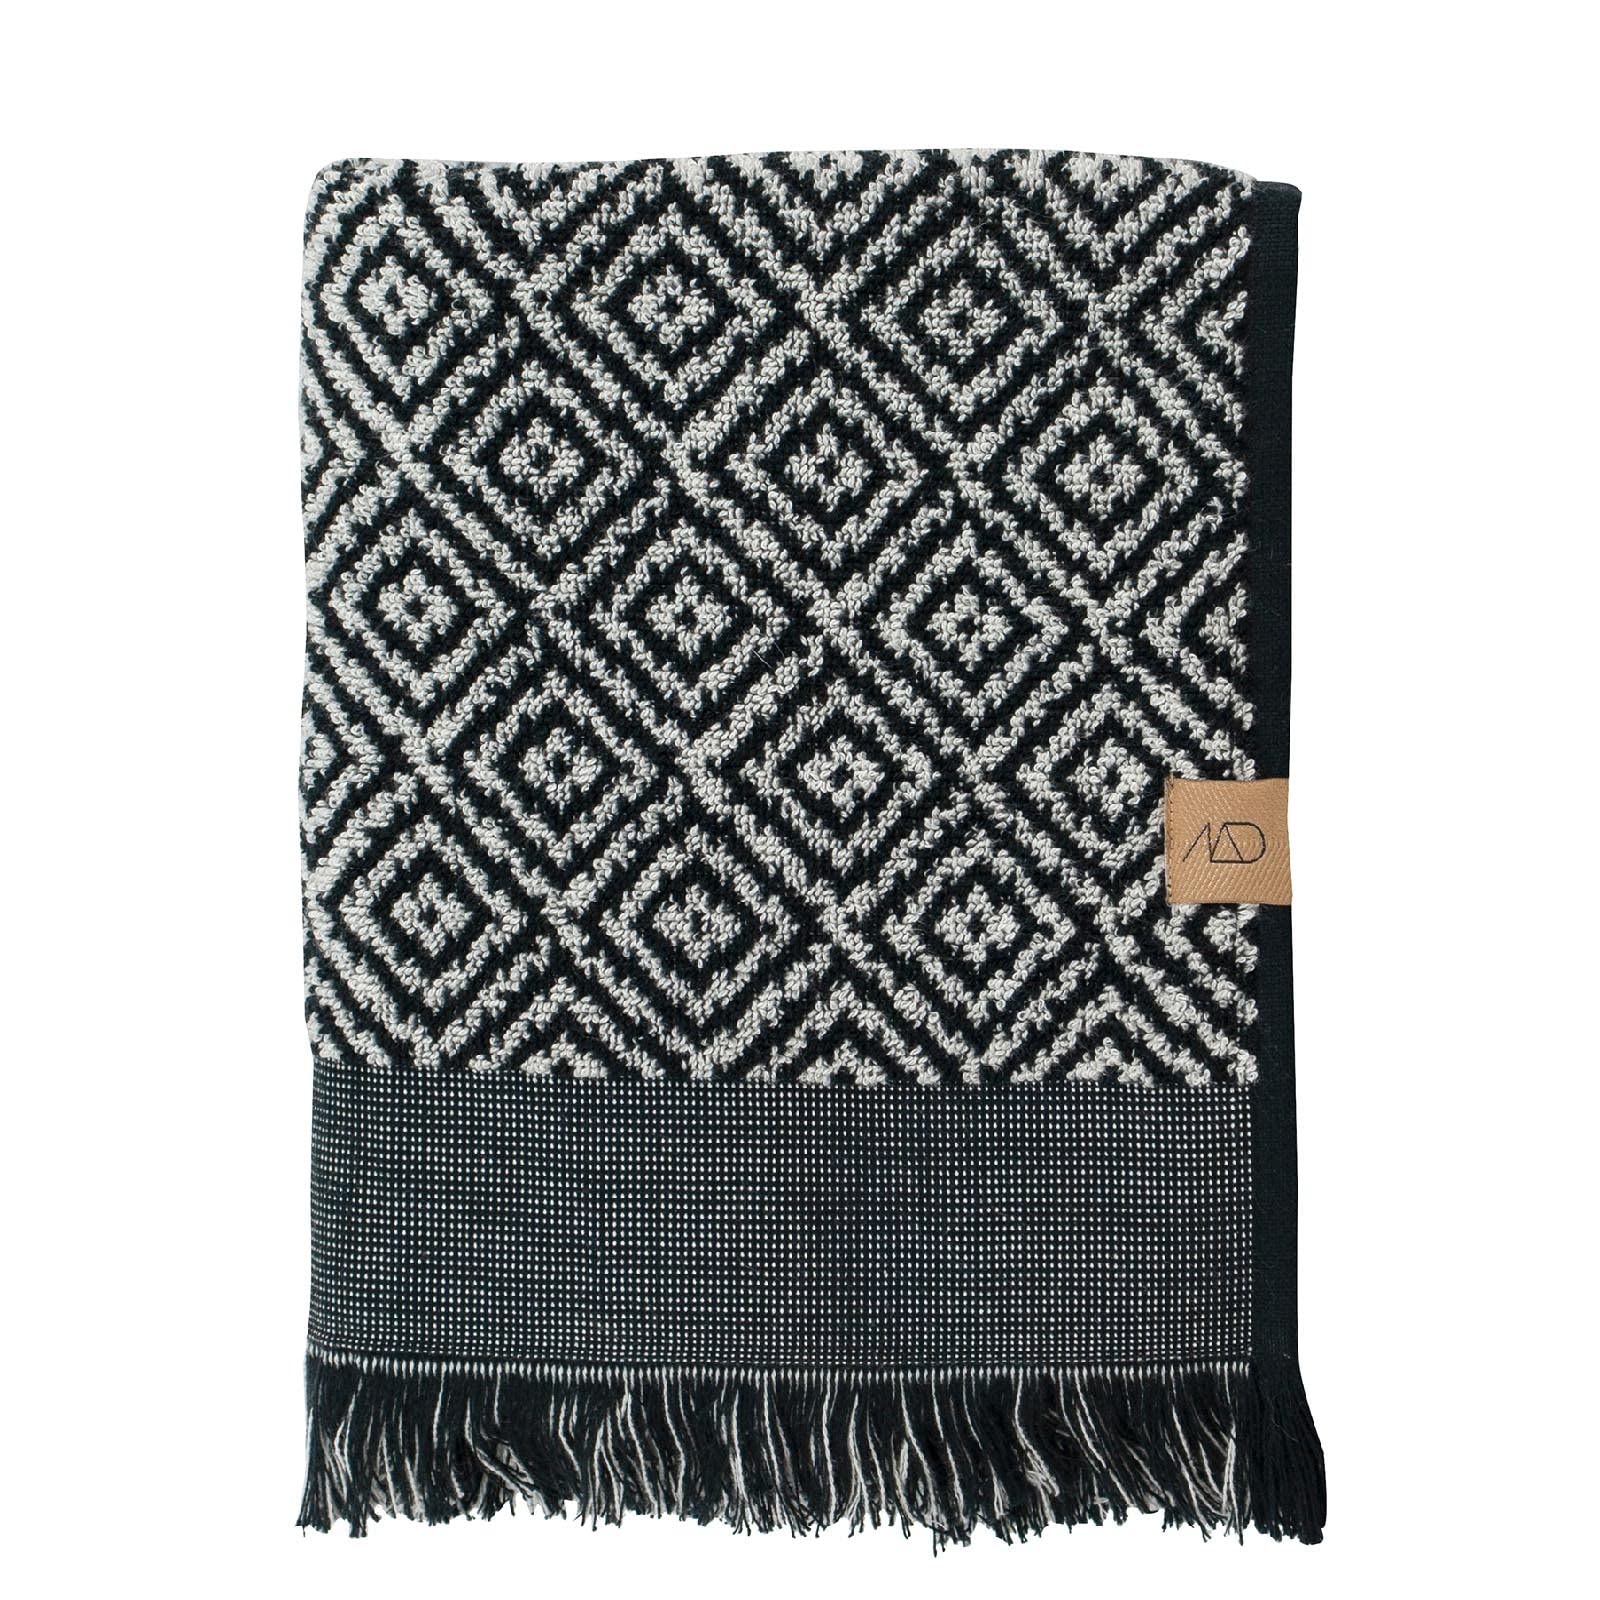 Mette Ditmer - Morocco Towel 50 x 95 cm - Black/White